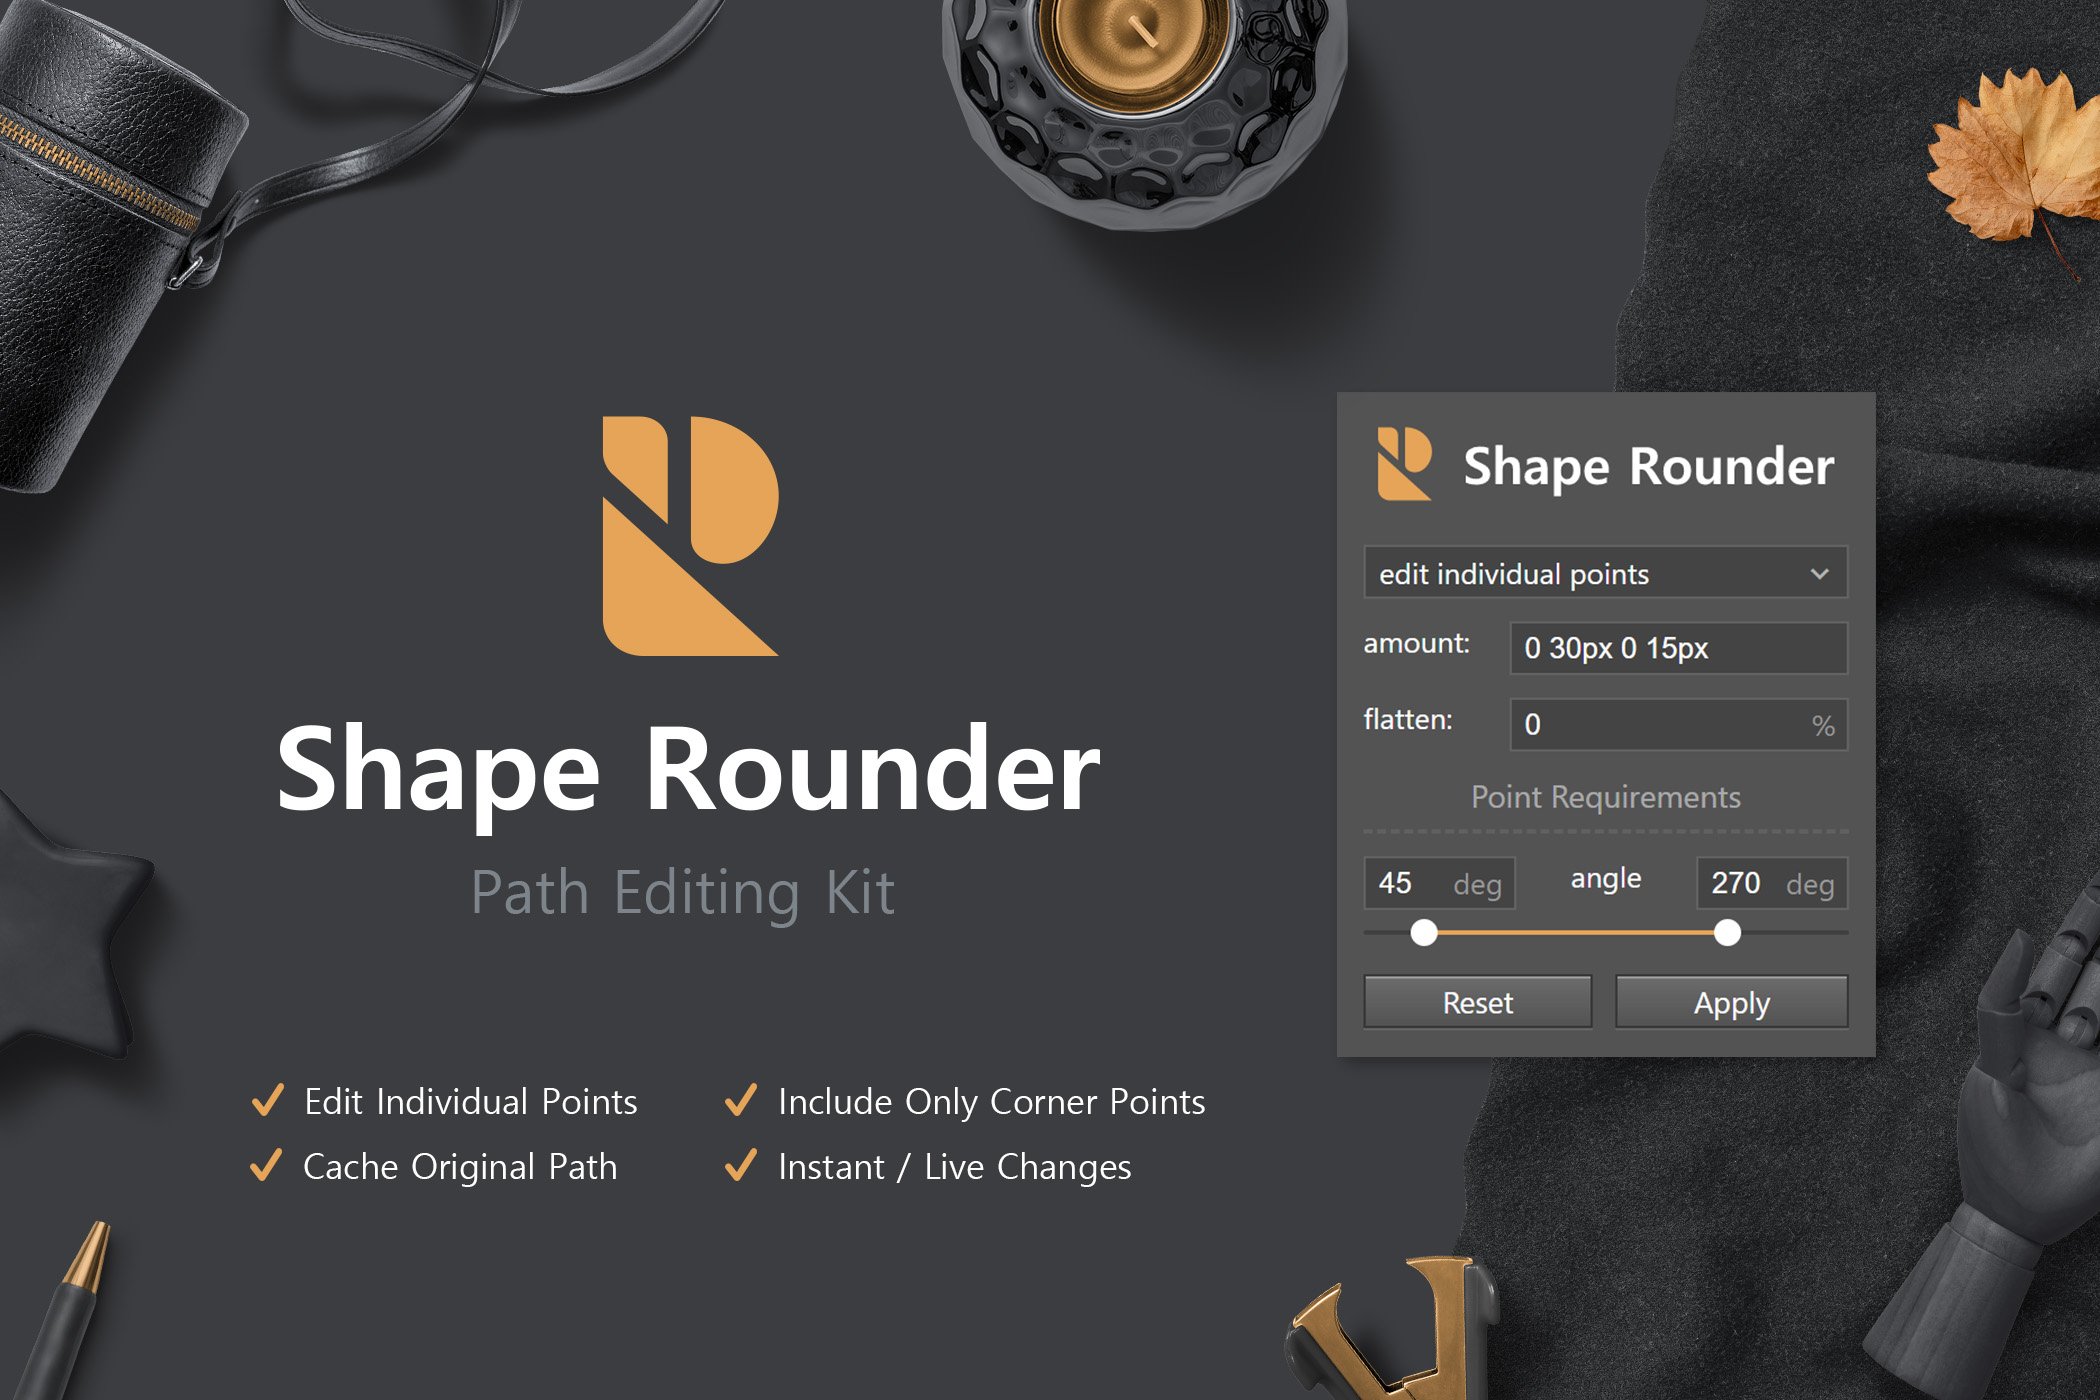 Shape Rounder - Path Editing Kitcover image.